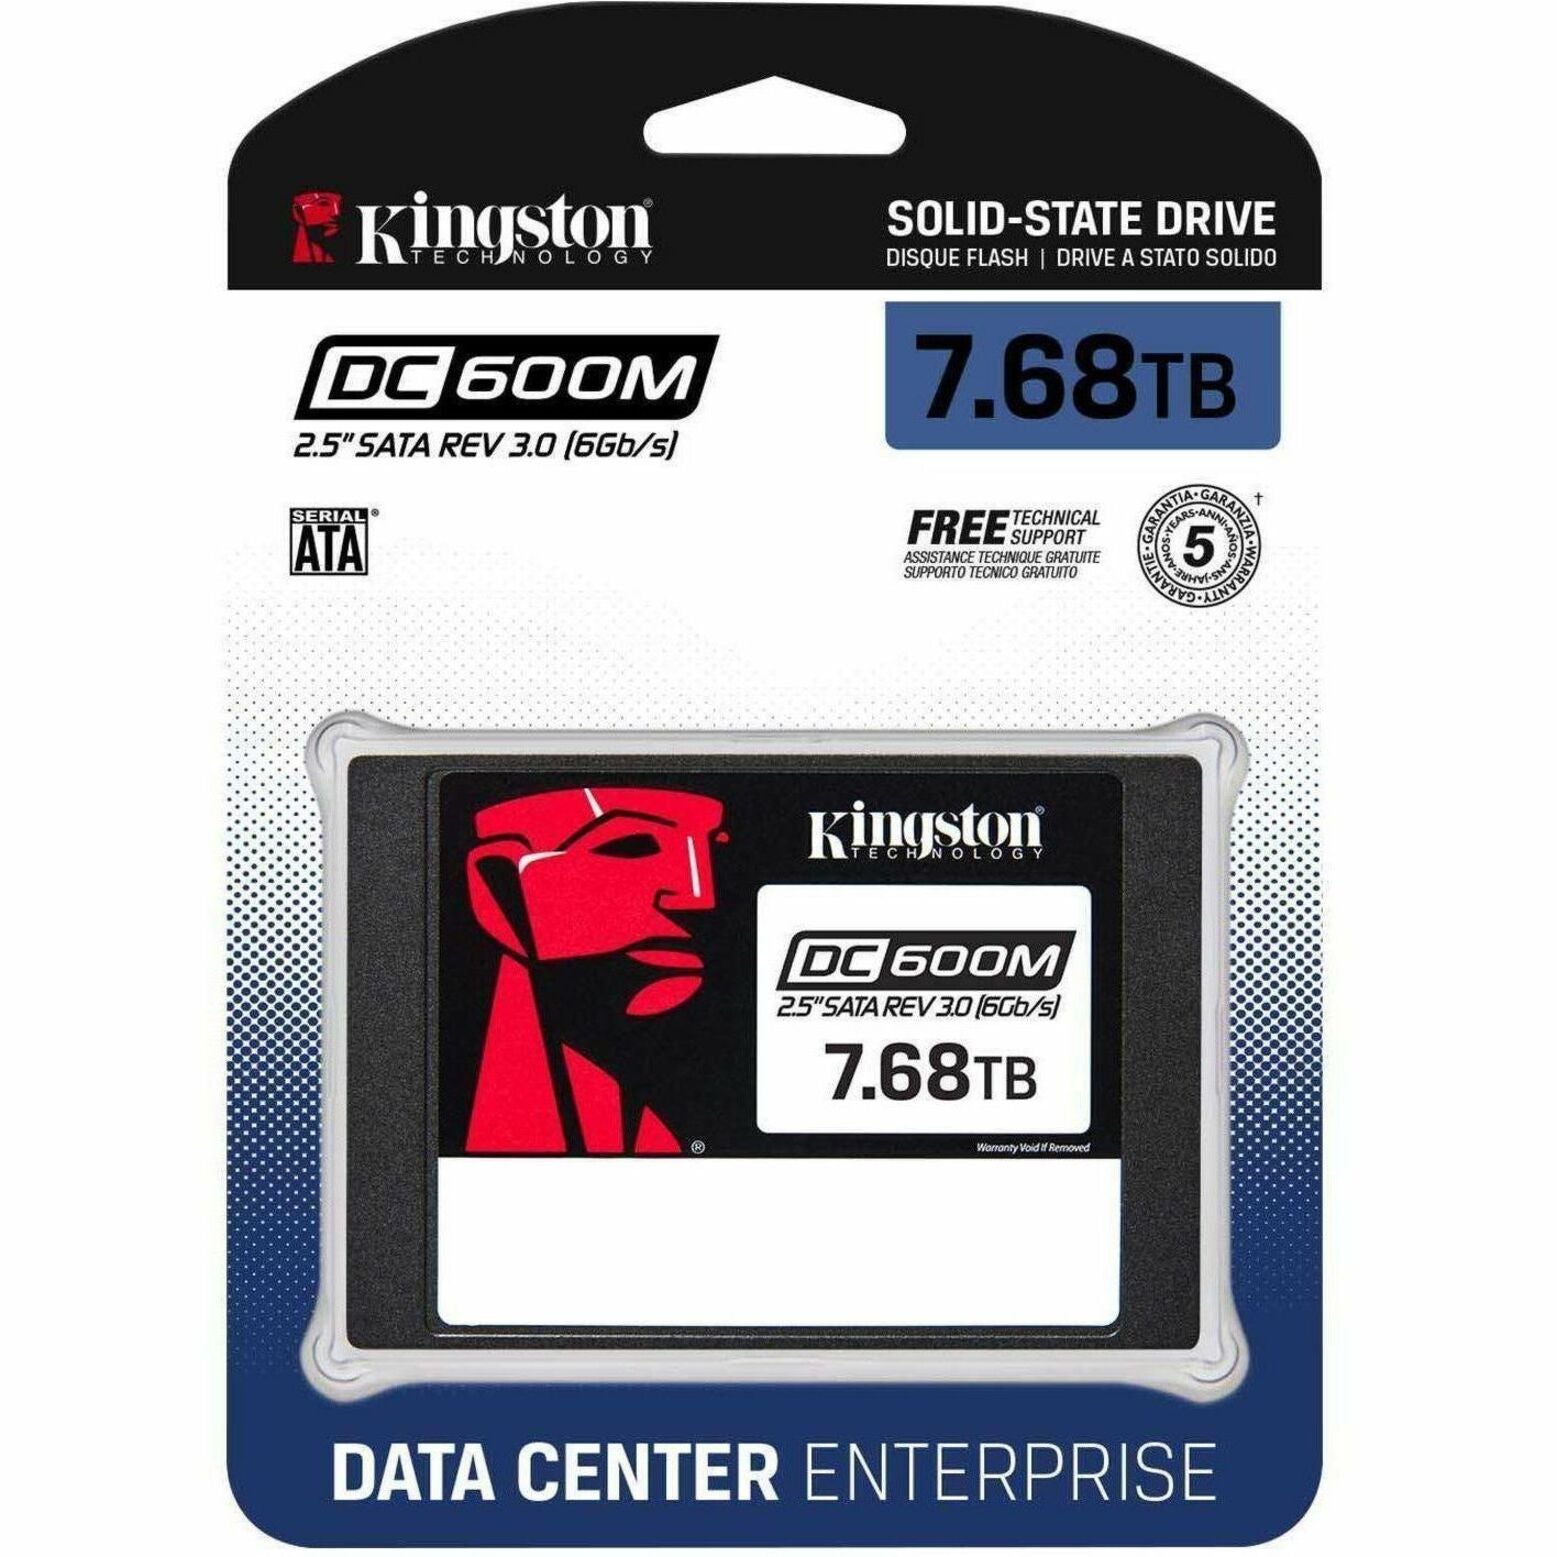 Kingston SEDC600M/7680G DC600M 2.5 Enterprise SATA SSD, 7.5TB Storage Capacity, 5 Year Warranty